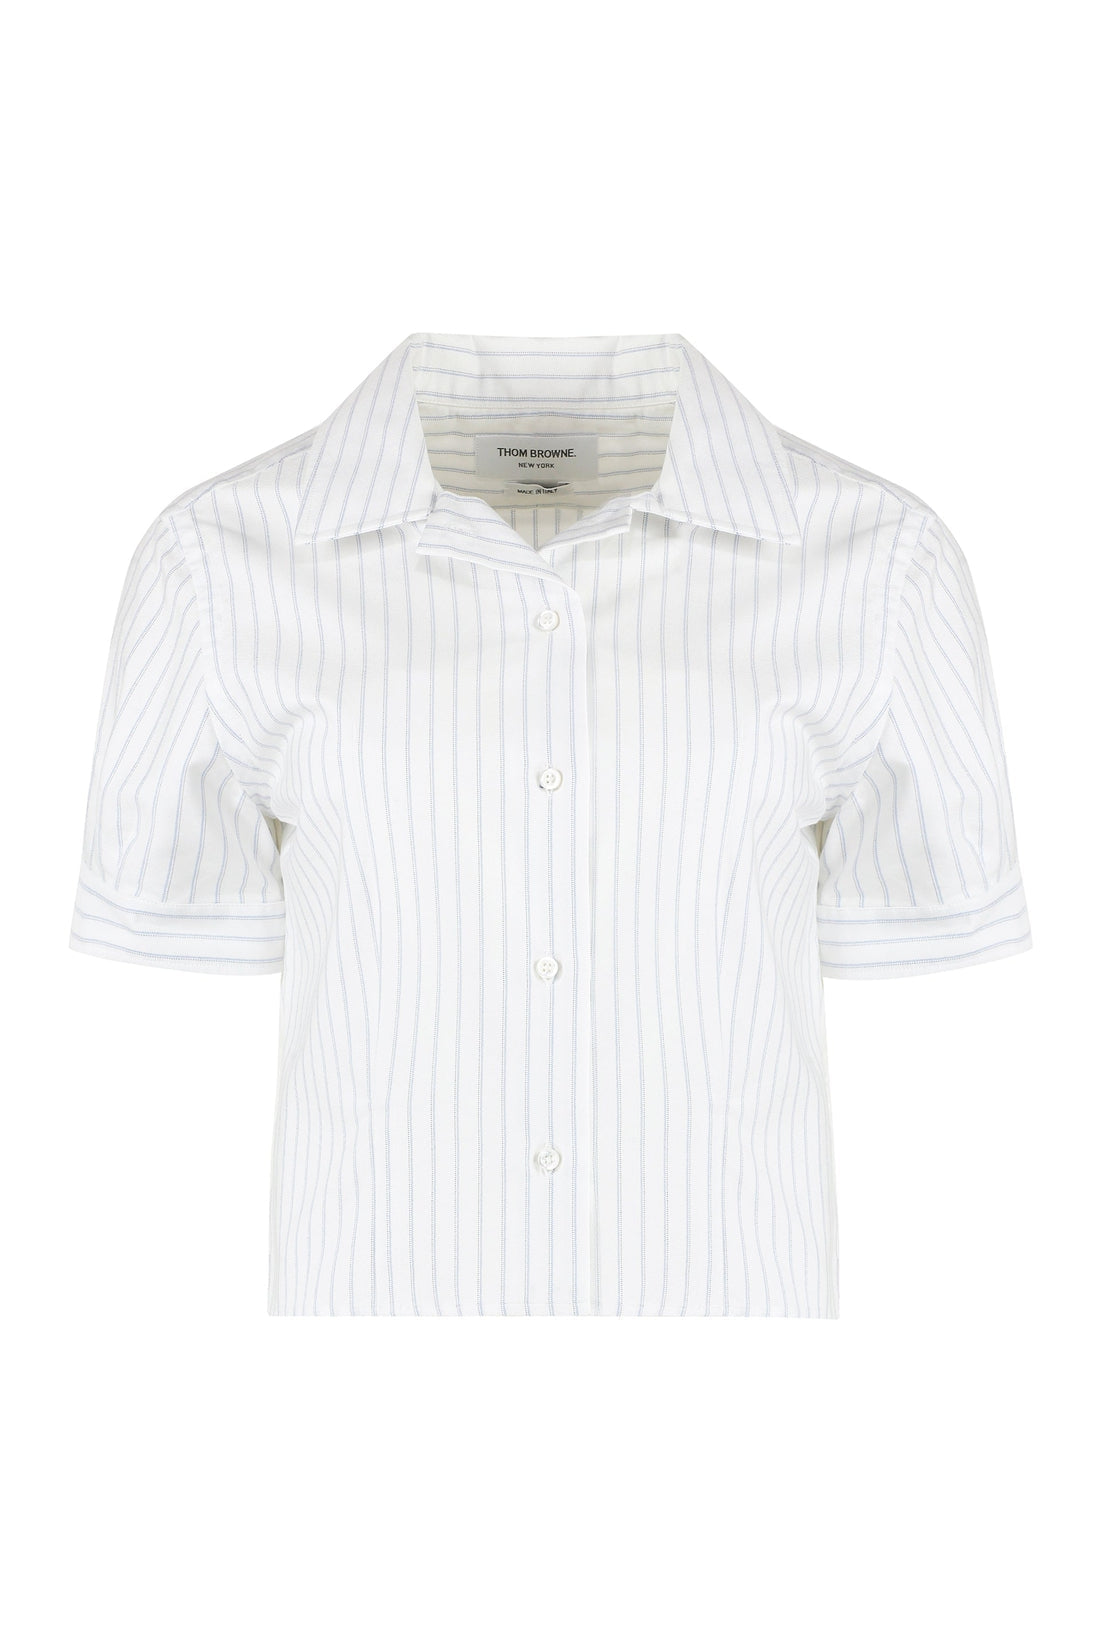 Thom Browne-OUTLET-SALE-Short sleeve cotton shirt-ARCHIVIST